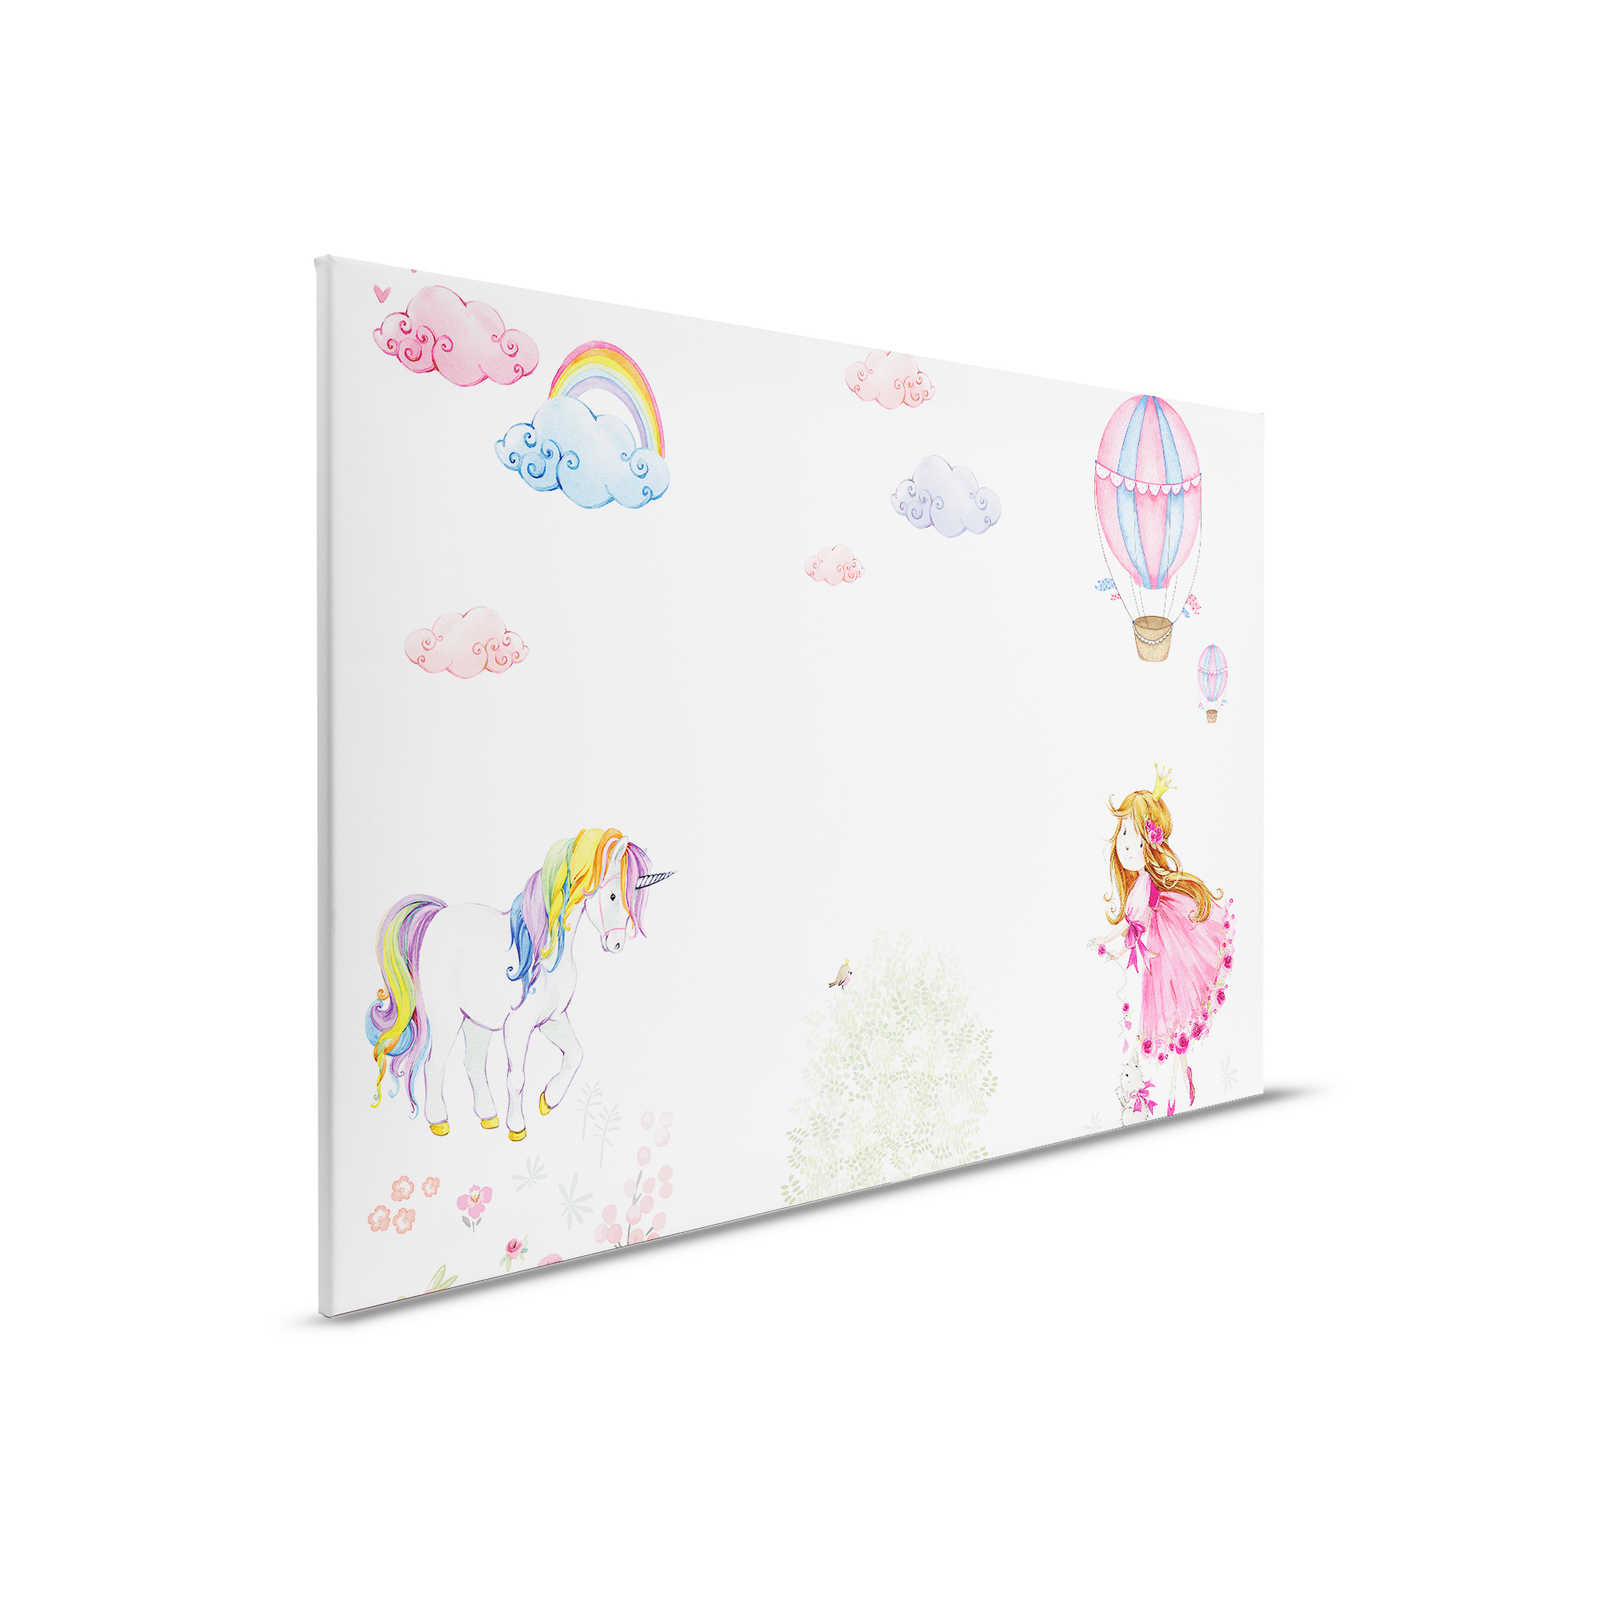         Canvas painting Nursery with princess and unicorn - 0,90 m x 0,60 m
    